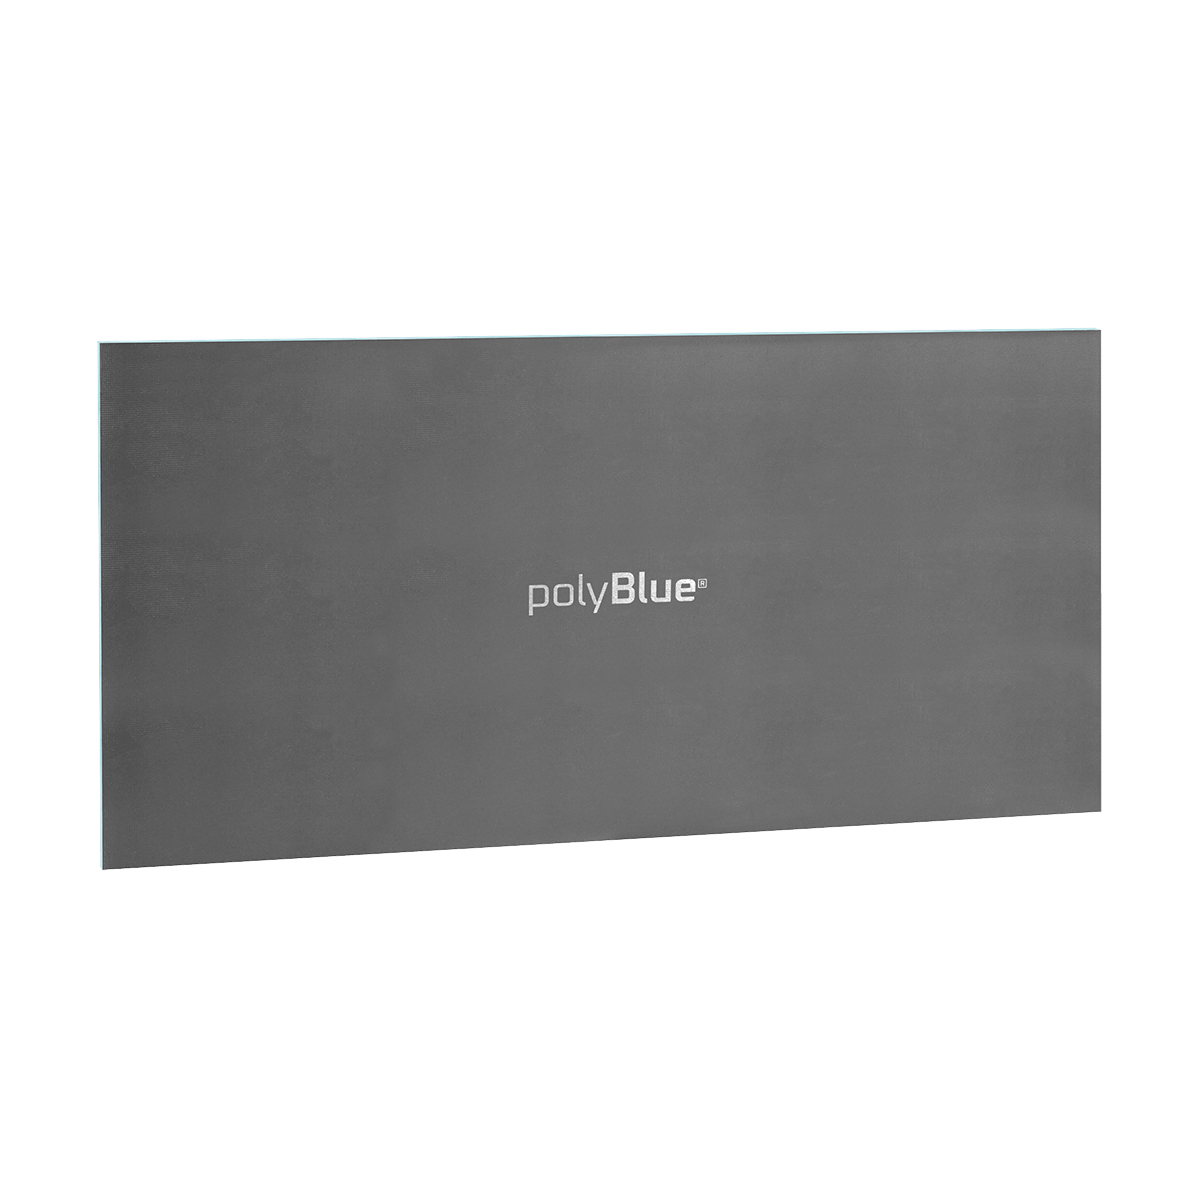 PolyBlue pro plaat XL 20mm